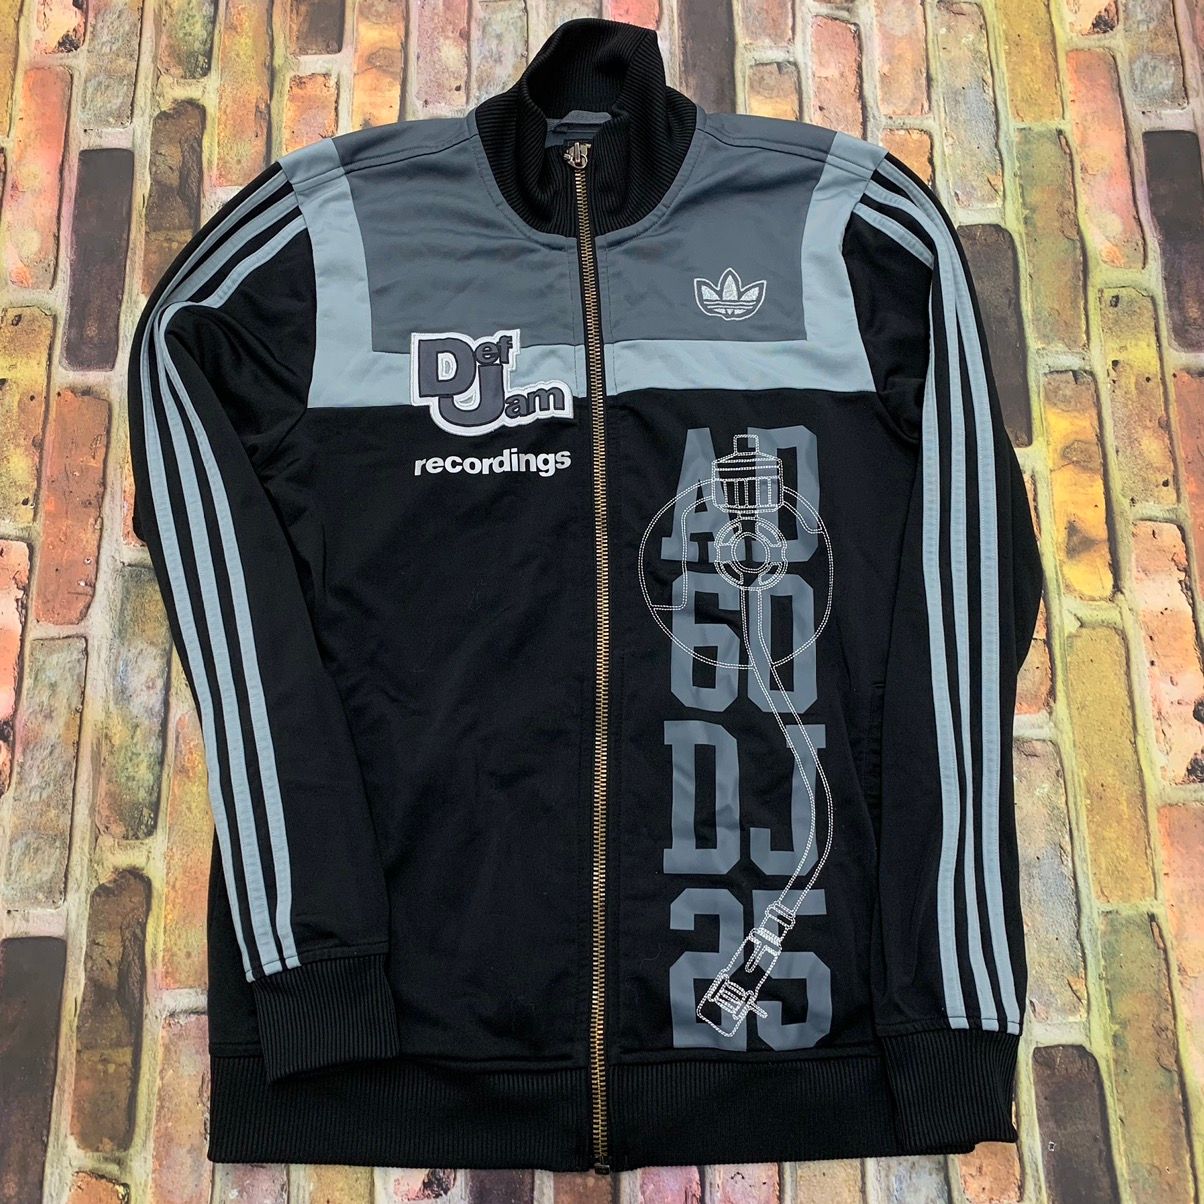 Adidas Def Jam jacket Size US S / EU 44-46 / 1 - 1 Preview